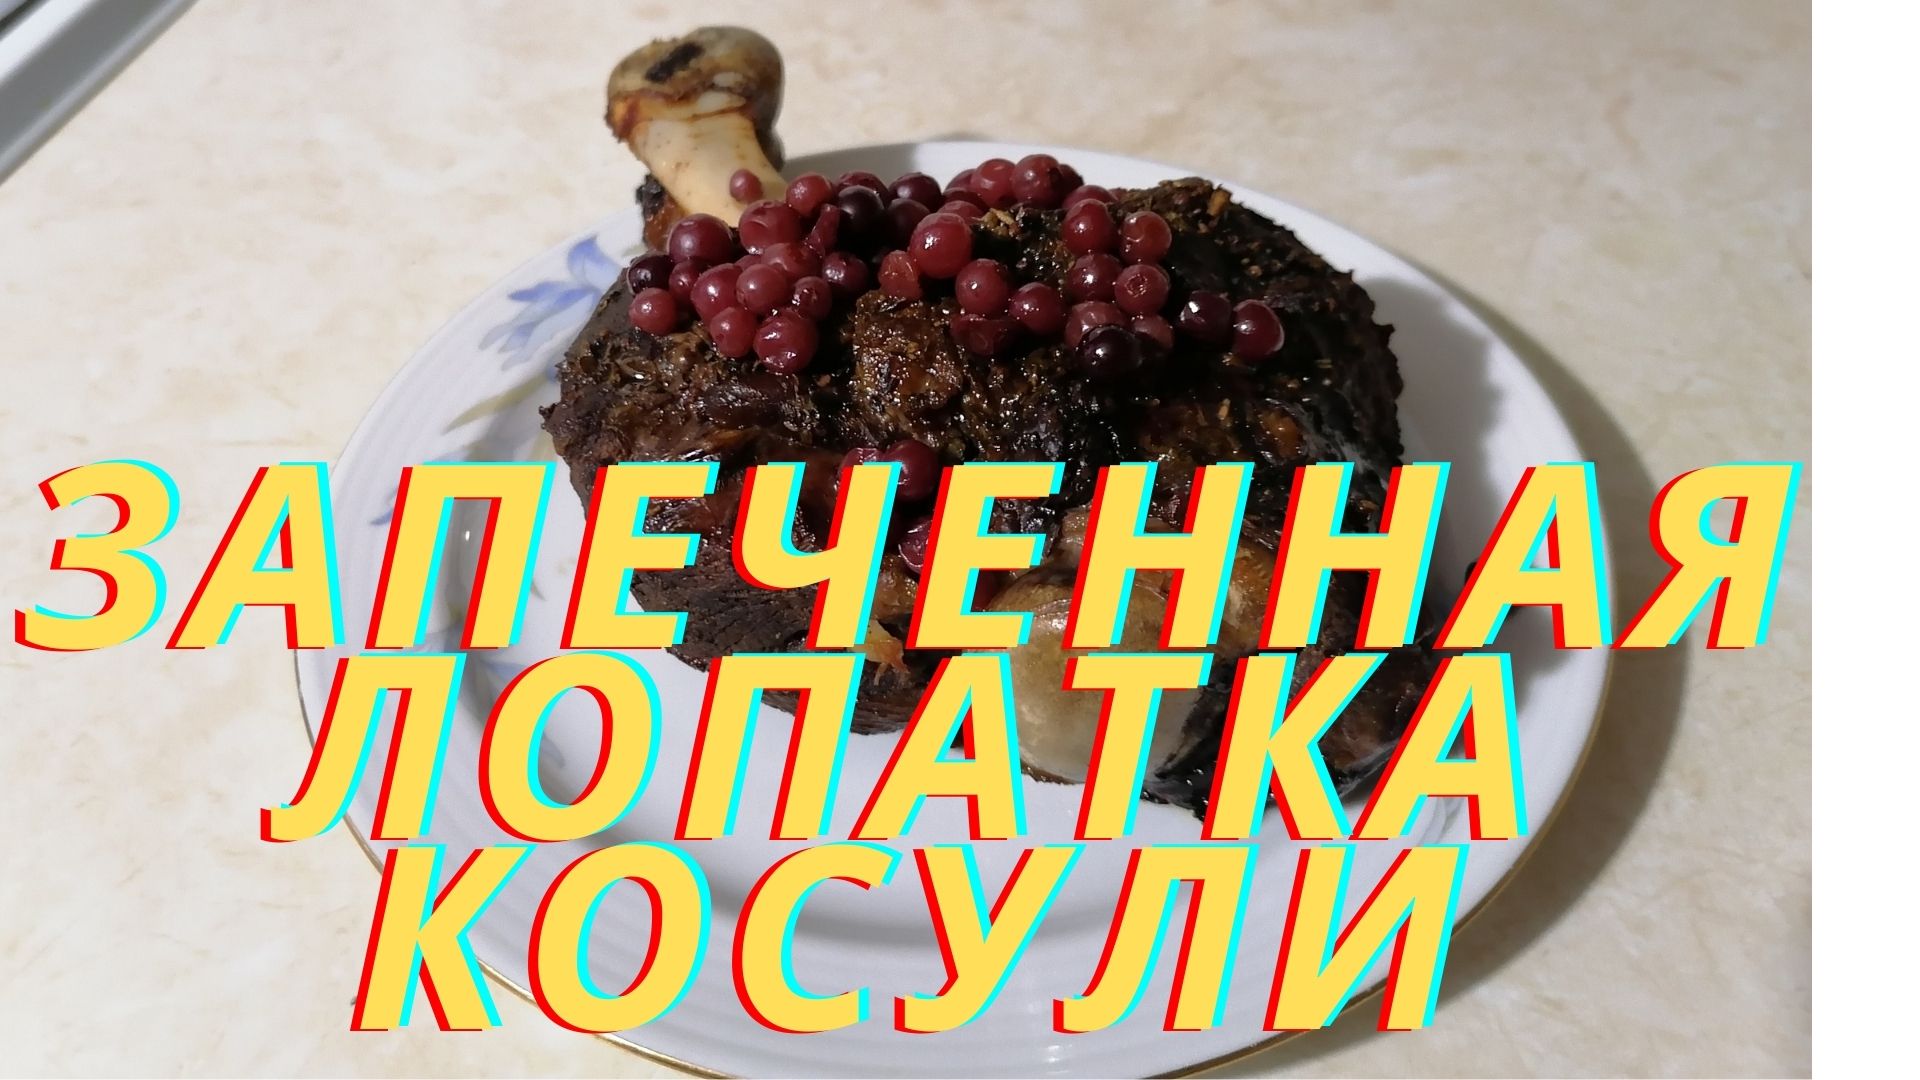 Рецепт от сибирского охотника-промысловика. Мясо косули в сливочной обмазке.